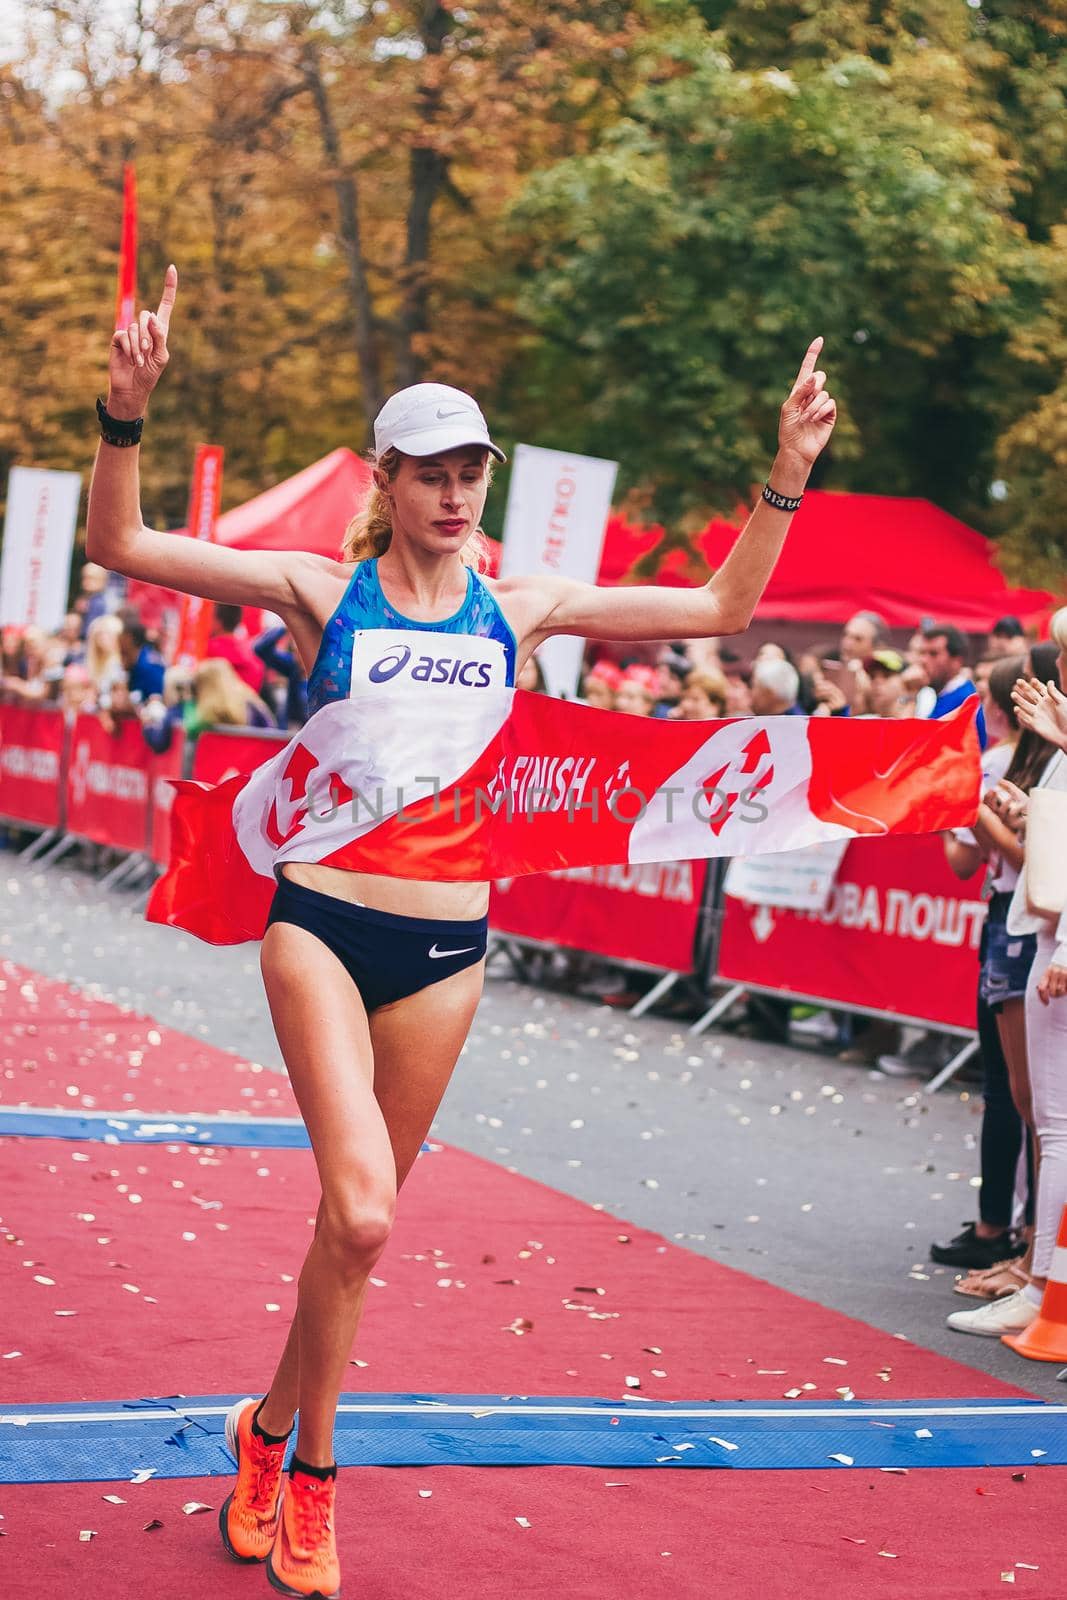 POLTAVA, UKRAINE - 1 SEPTEMBER 2019: A young woman reaches finish line during Nova Poshta Poltava Half Marathon by mmp1206